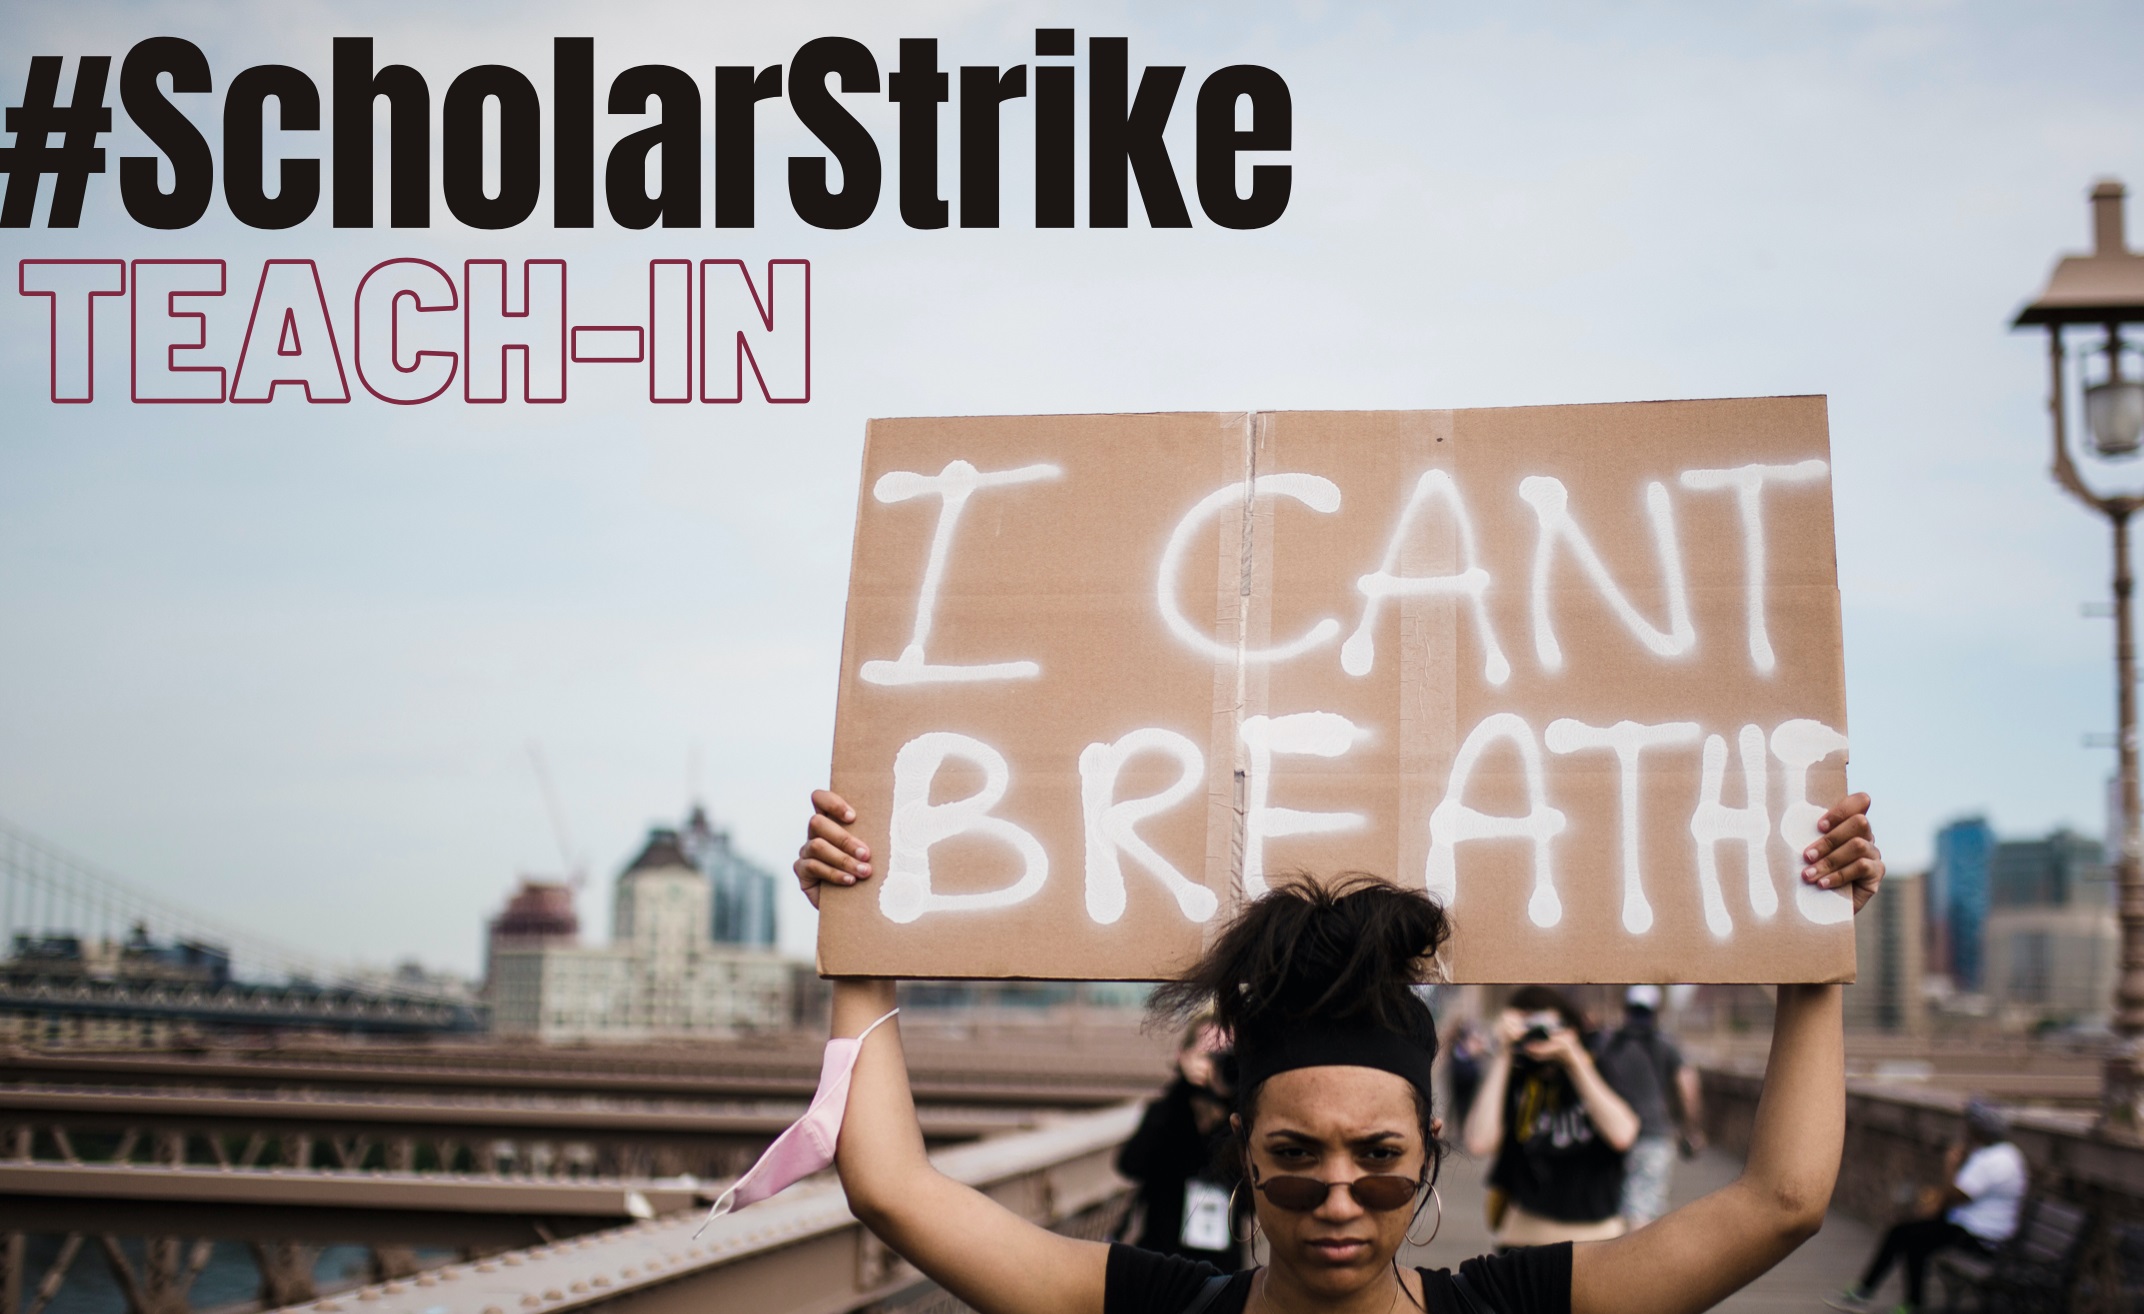 #ScholarStrike Teach-In